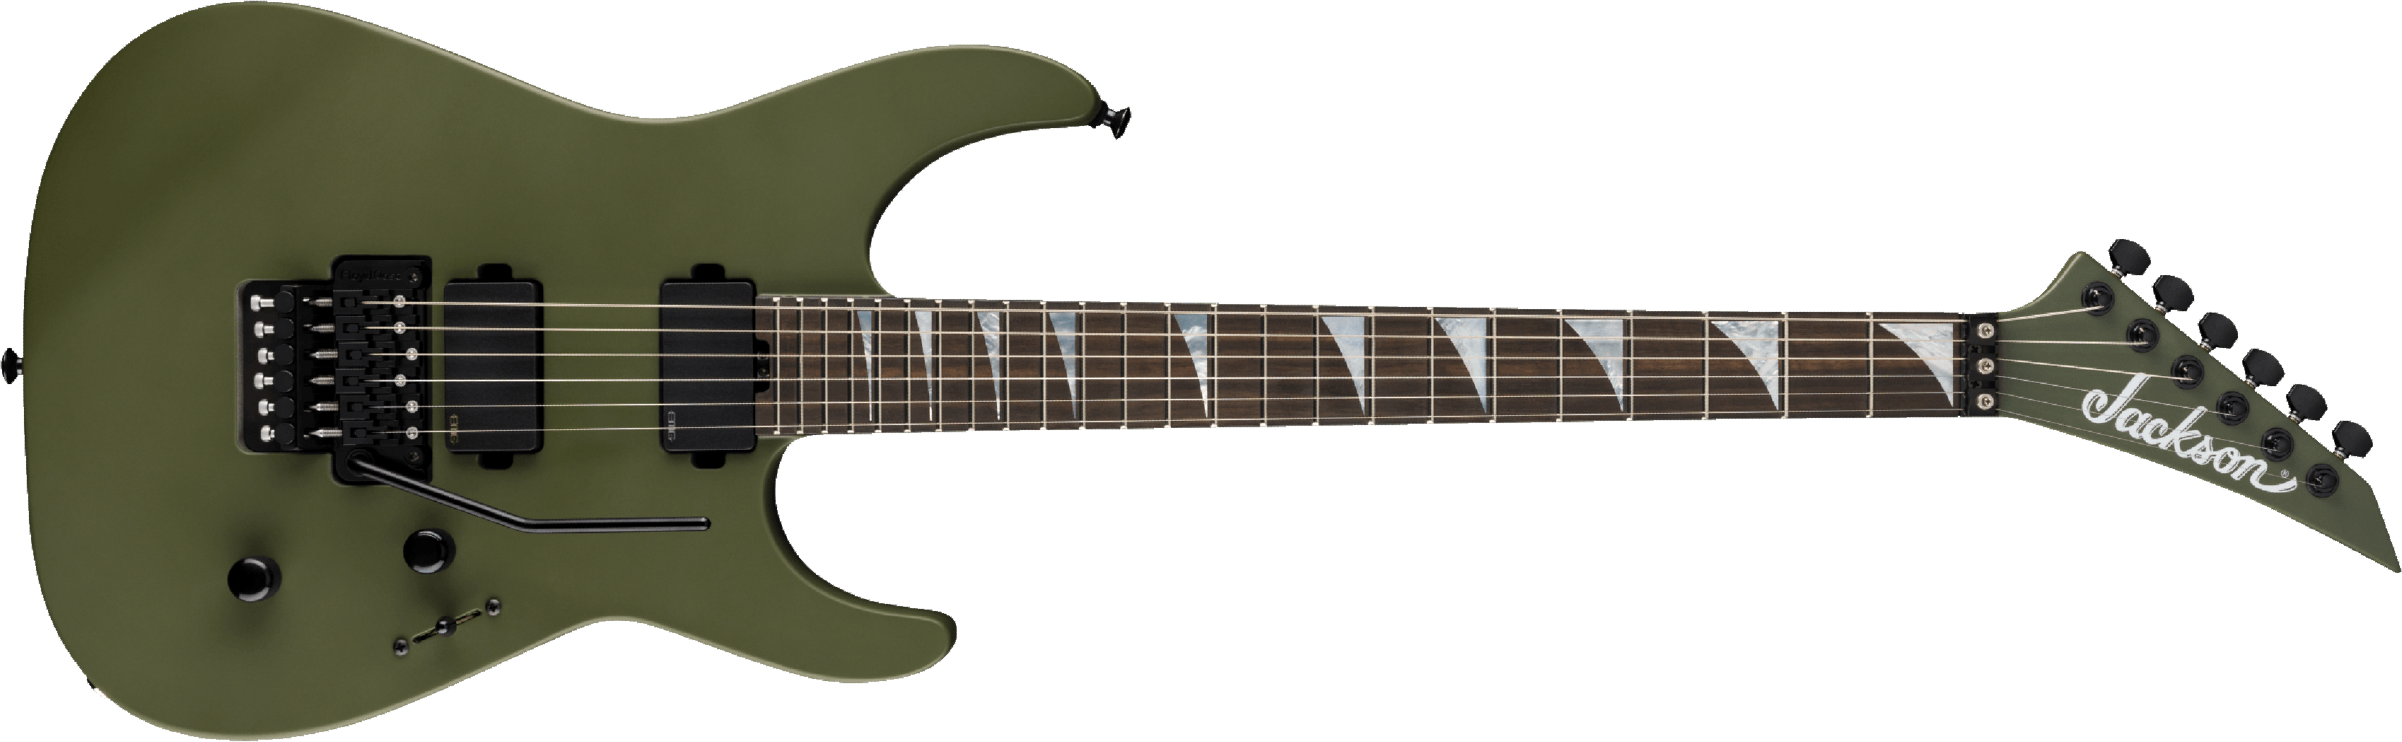 Jackson Sl2mg American Soloist Trem Hh Eb - Matte Army Drab - Metal electric guitar - Main picture